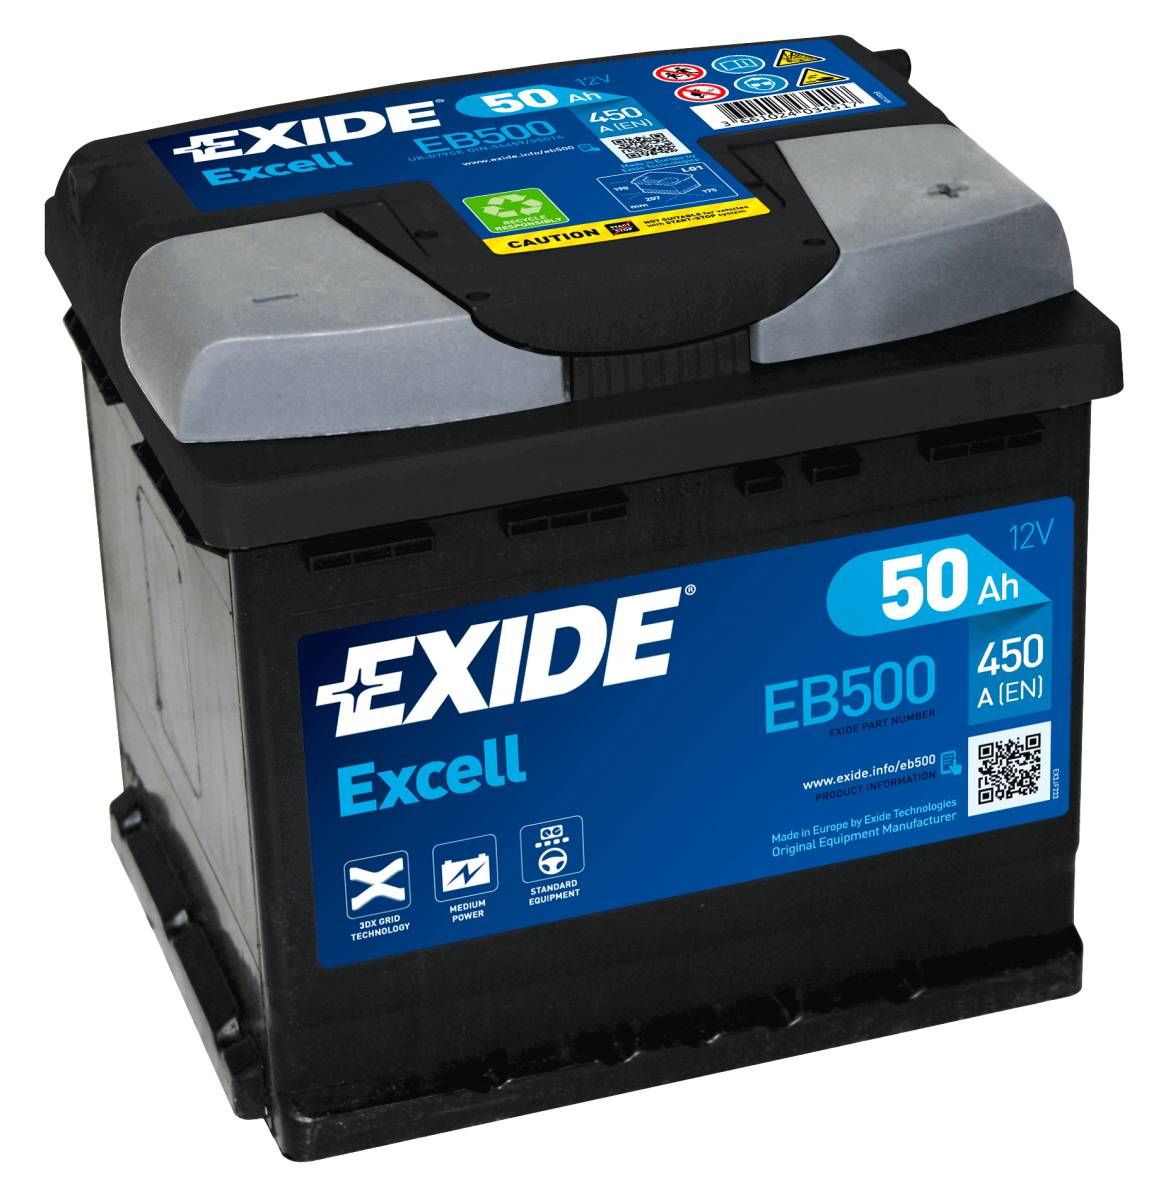 Batteria per auto Exide EB500 Excell 12V 50Ah 450A